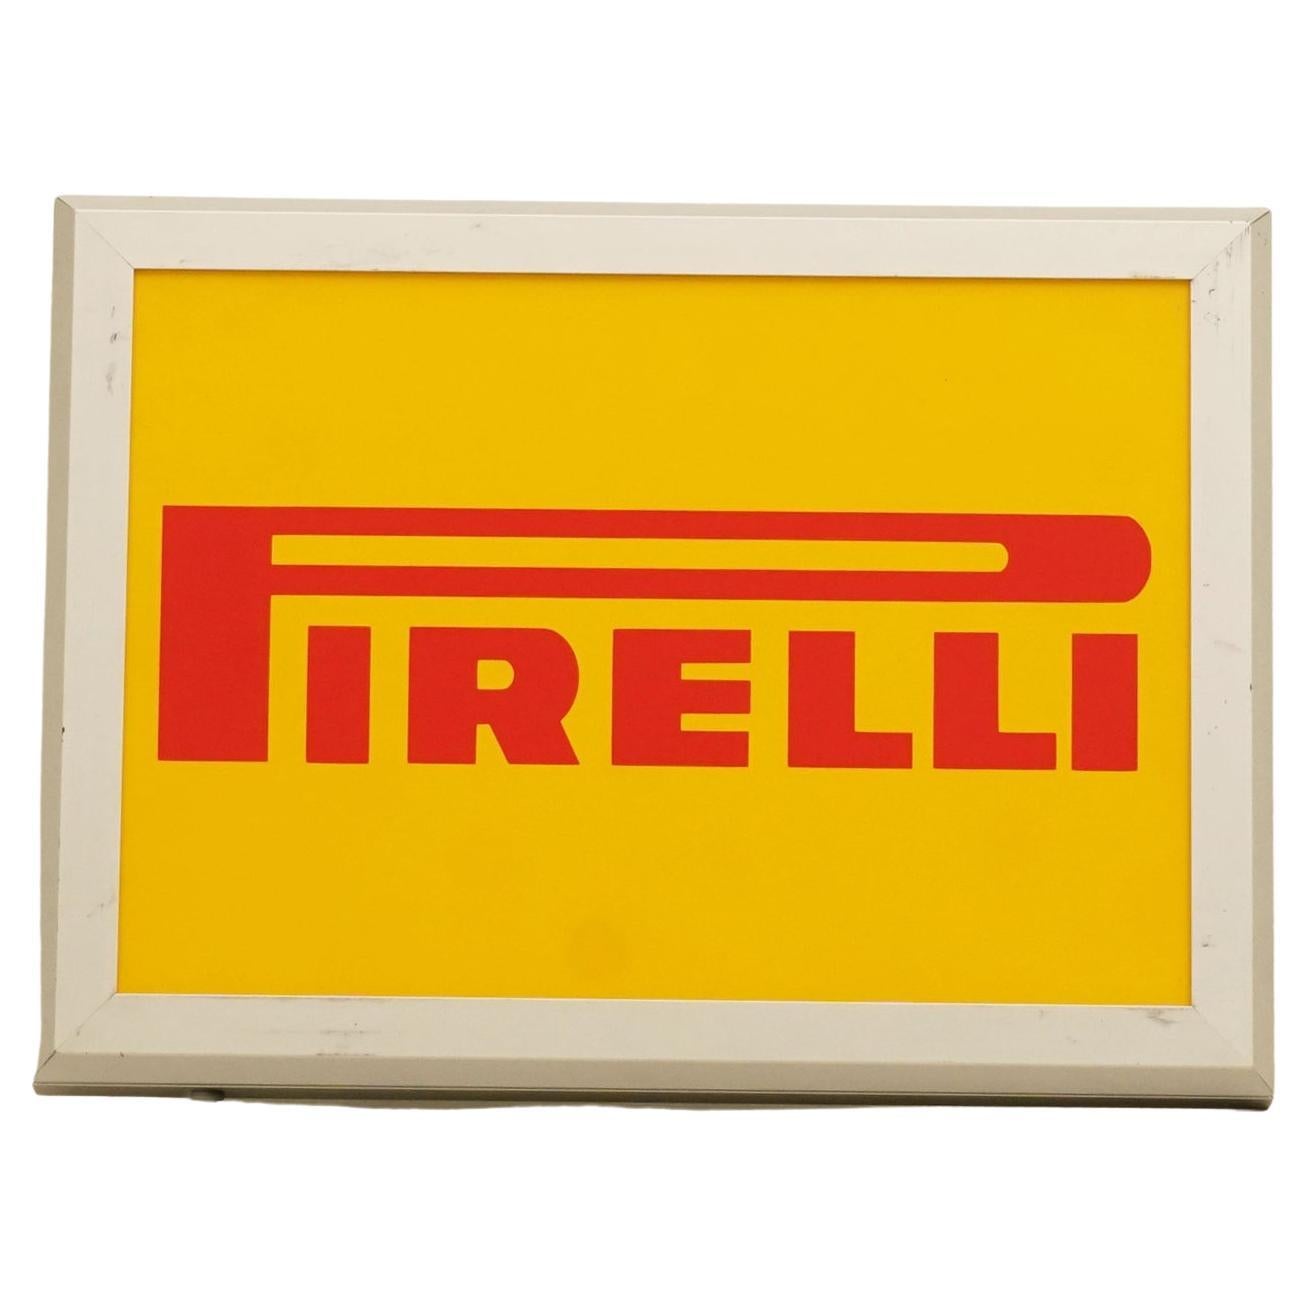 1990s Pirelli Advertising Sign Light For Sale